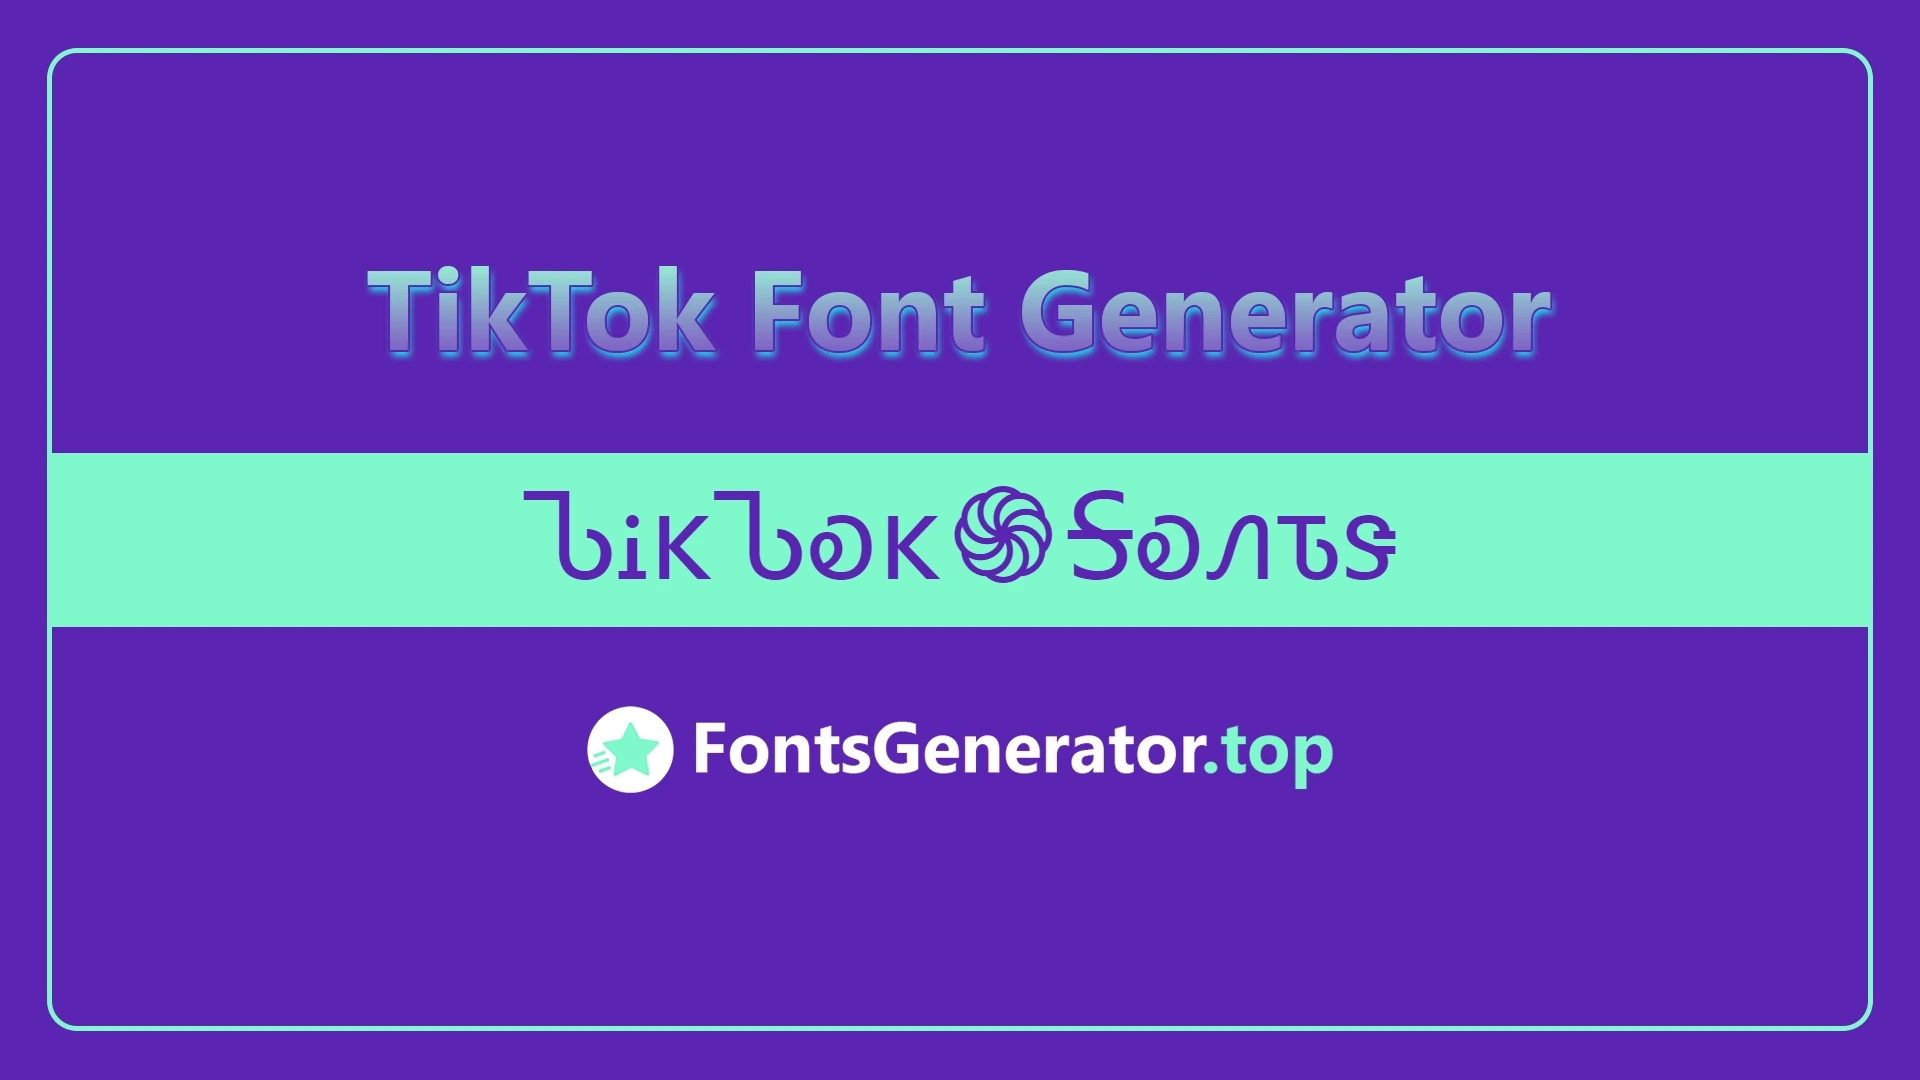 TikTok Fonts Generator